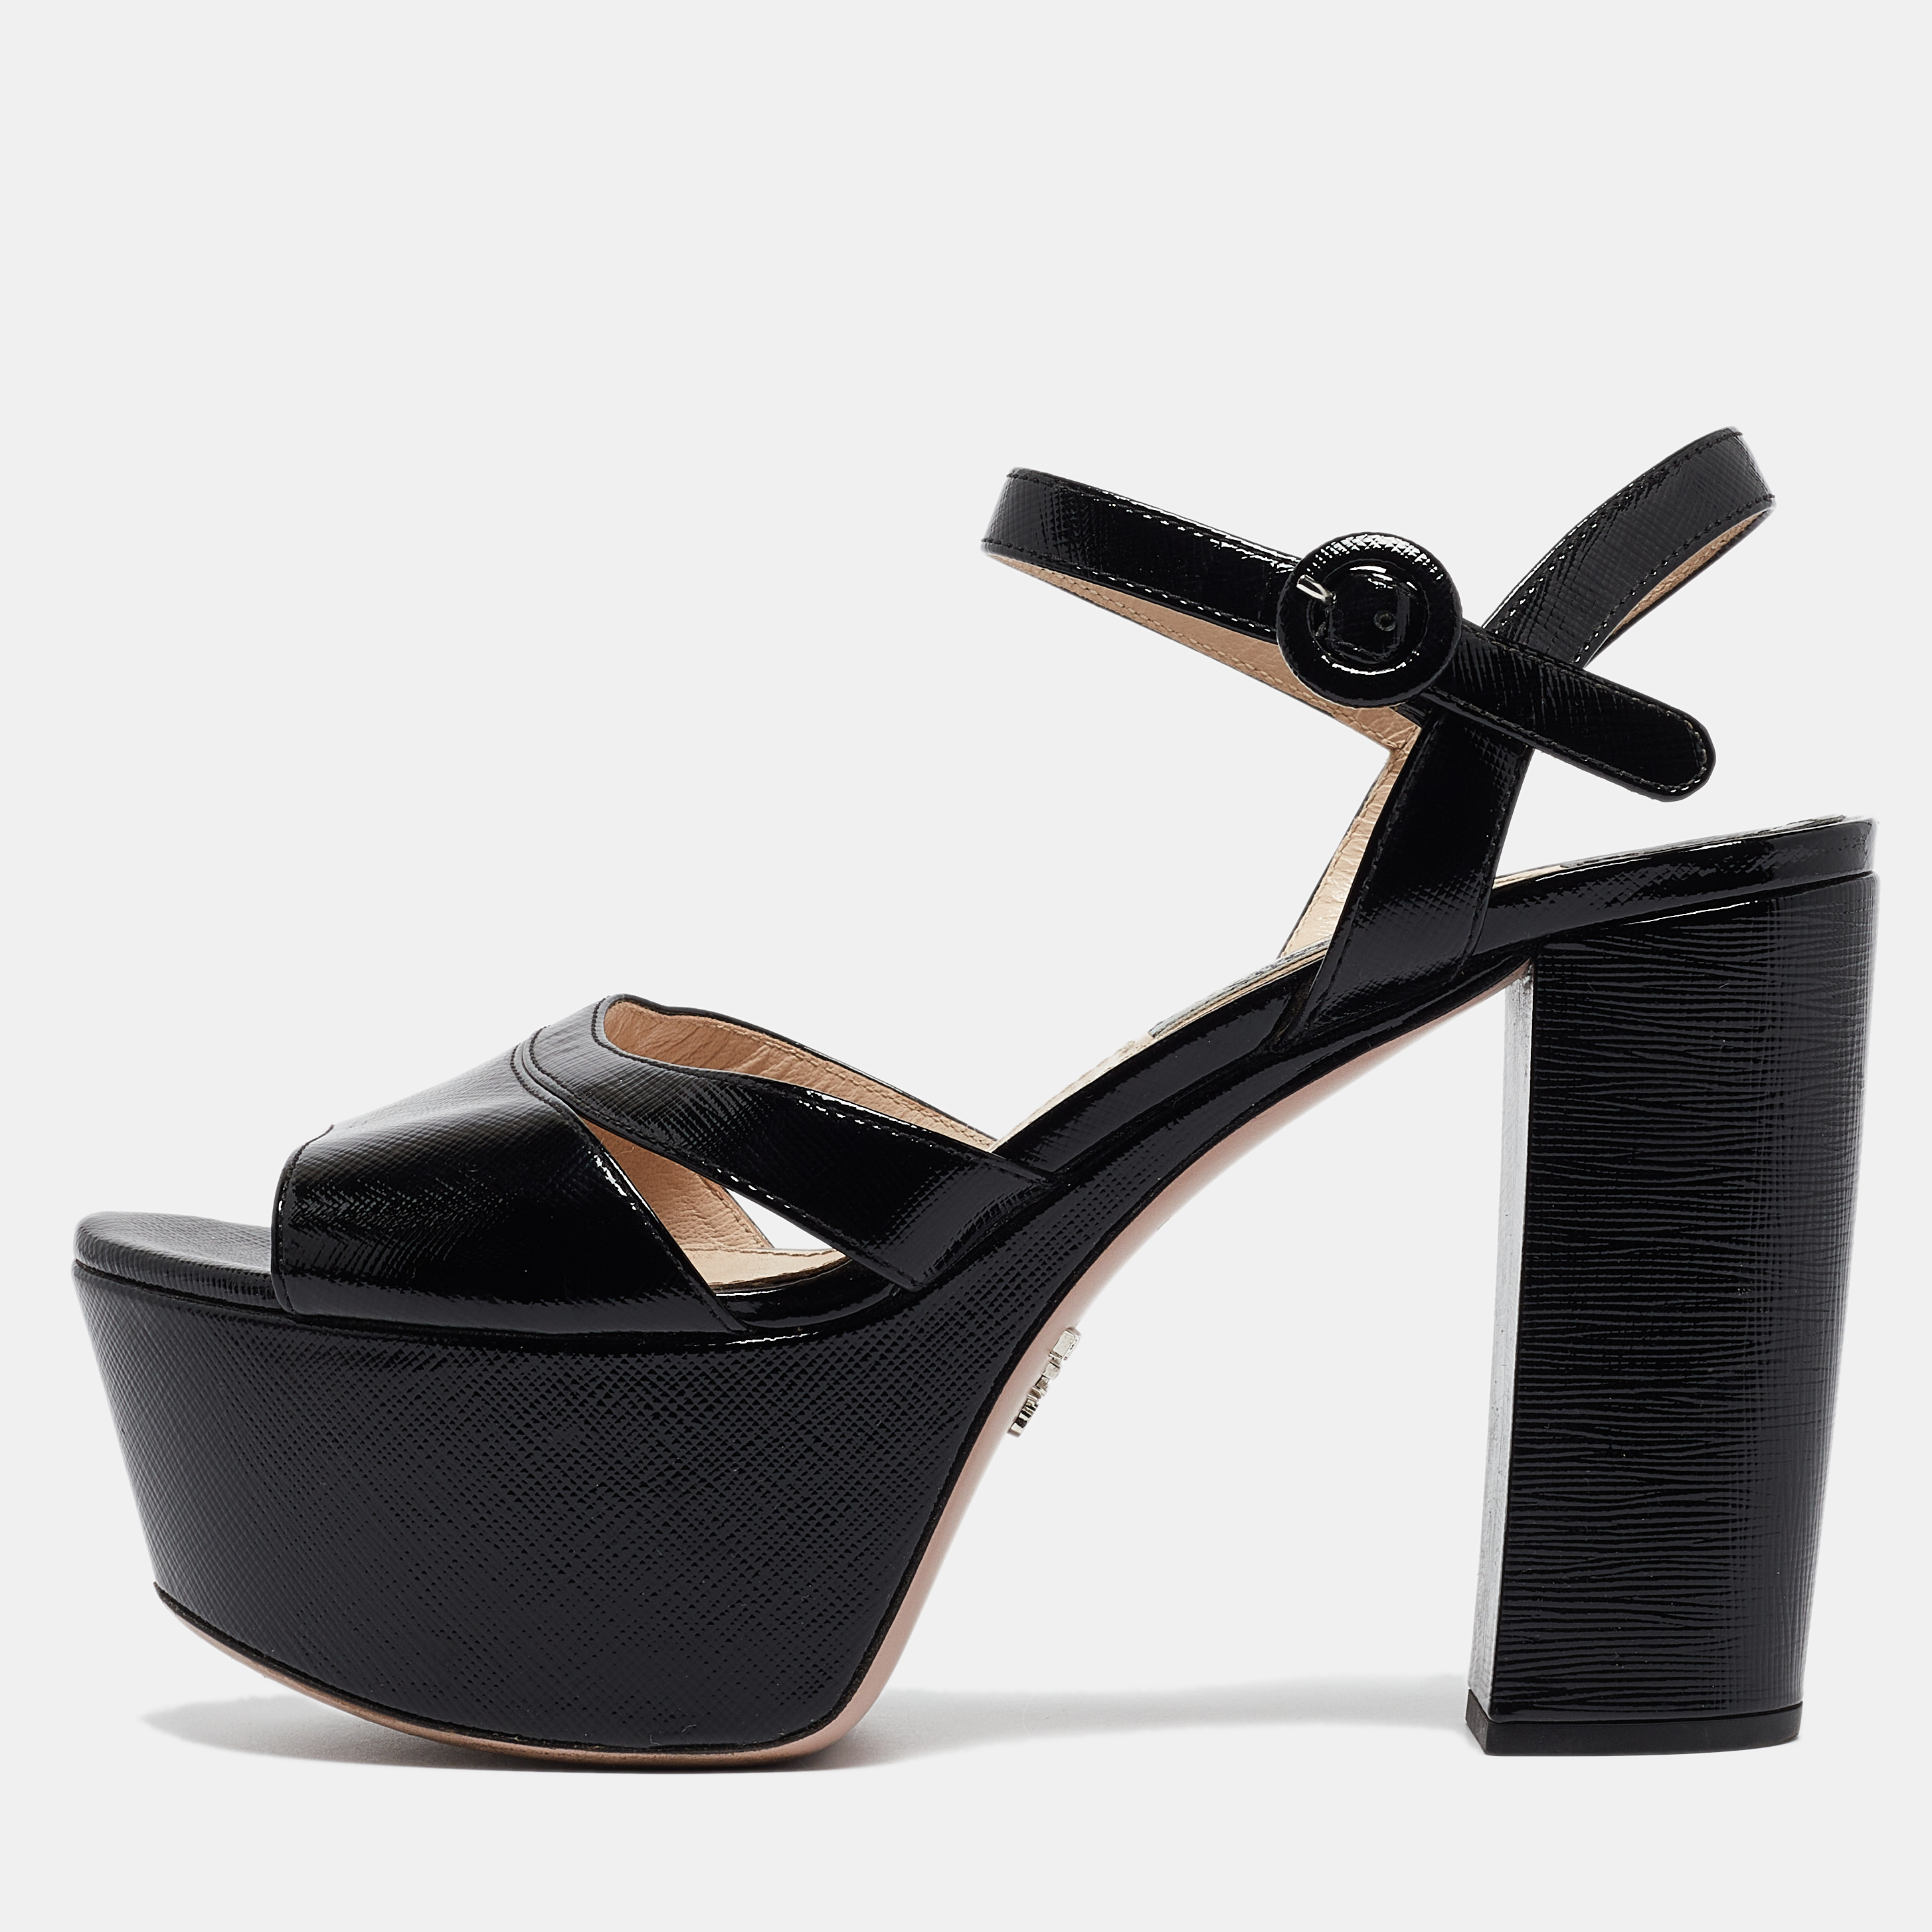 Prada black patent platform ankle strap sandals size 37